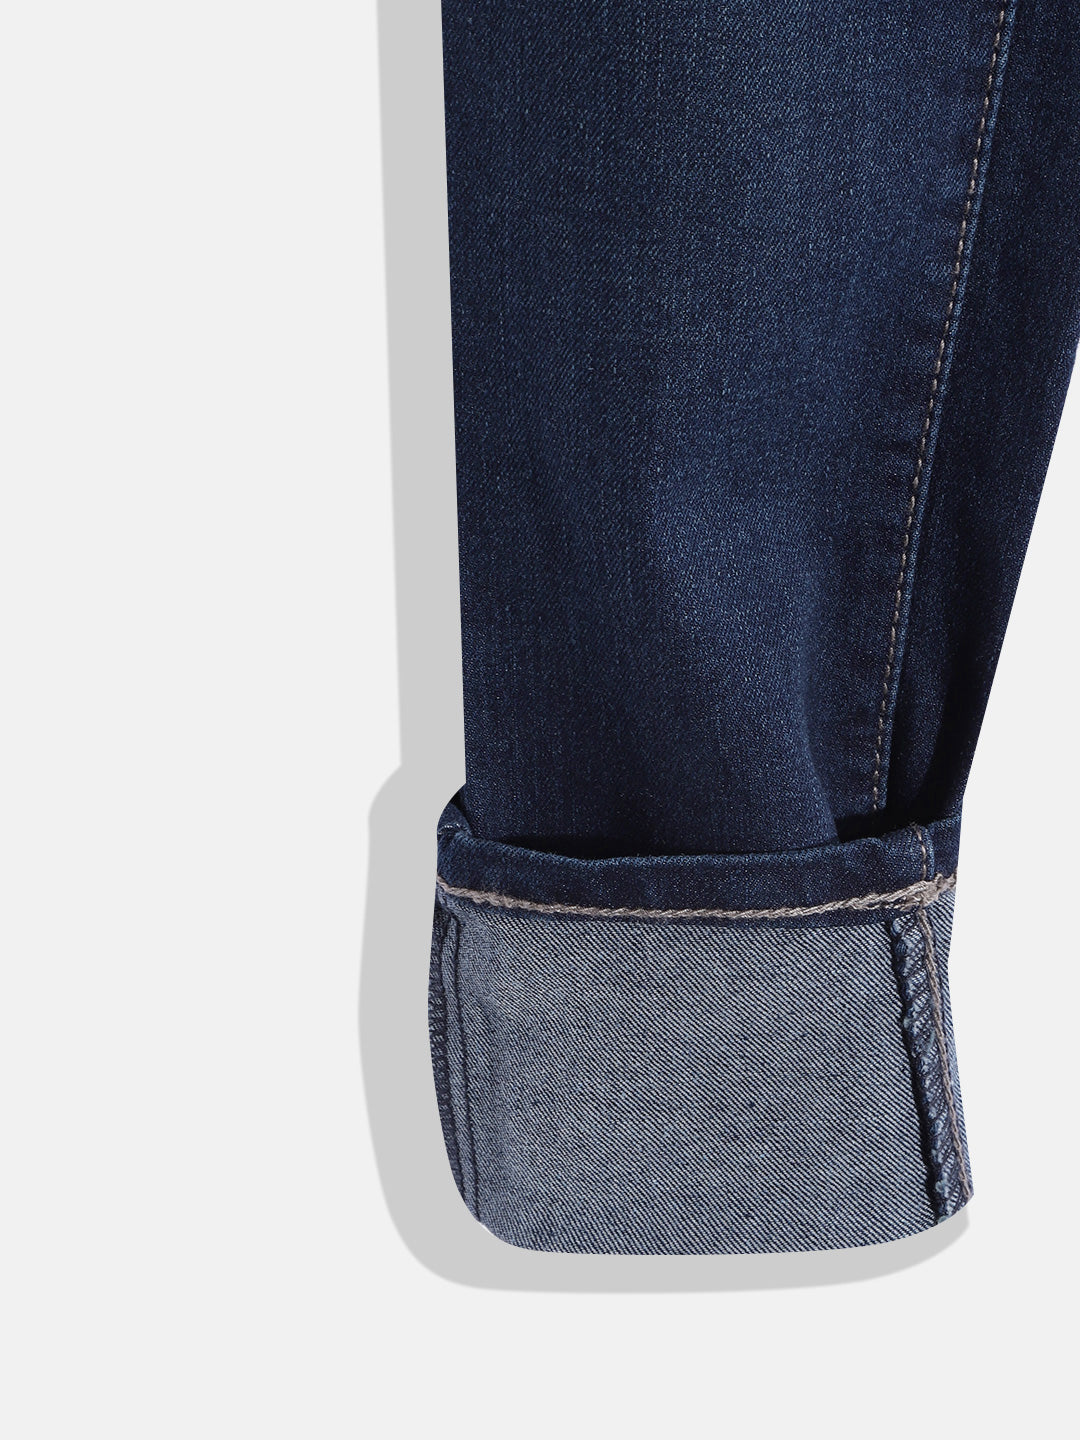 Levi's® 710™ Super Skinny Jeans Jeans Levi's   